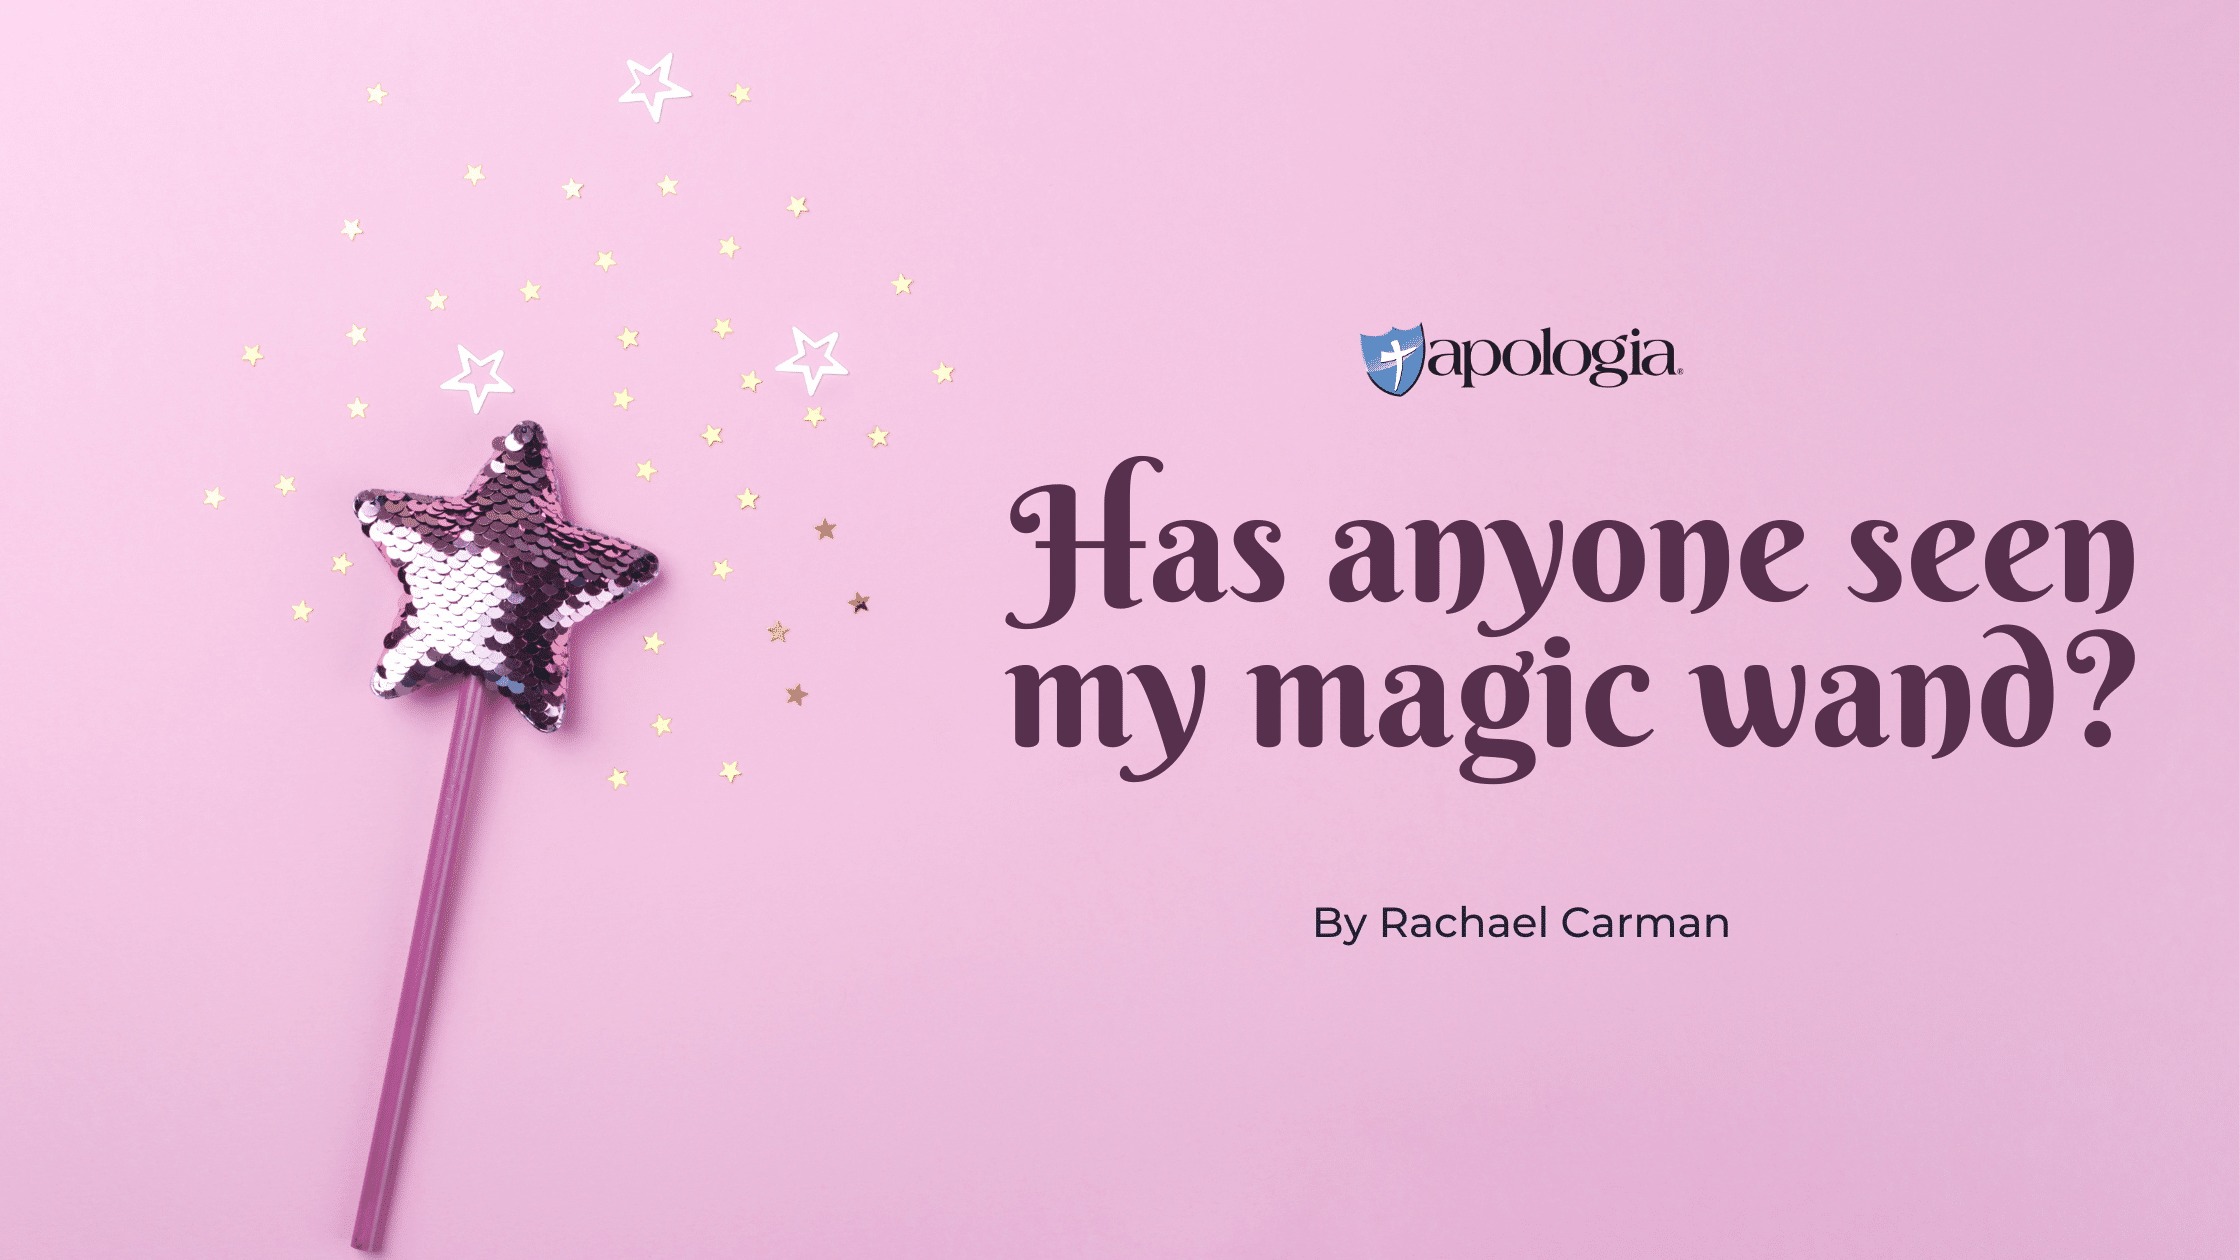 Has anyone seen my magic wand?